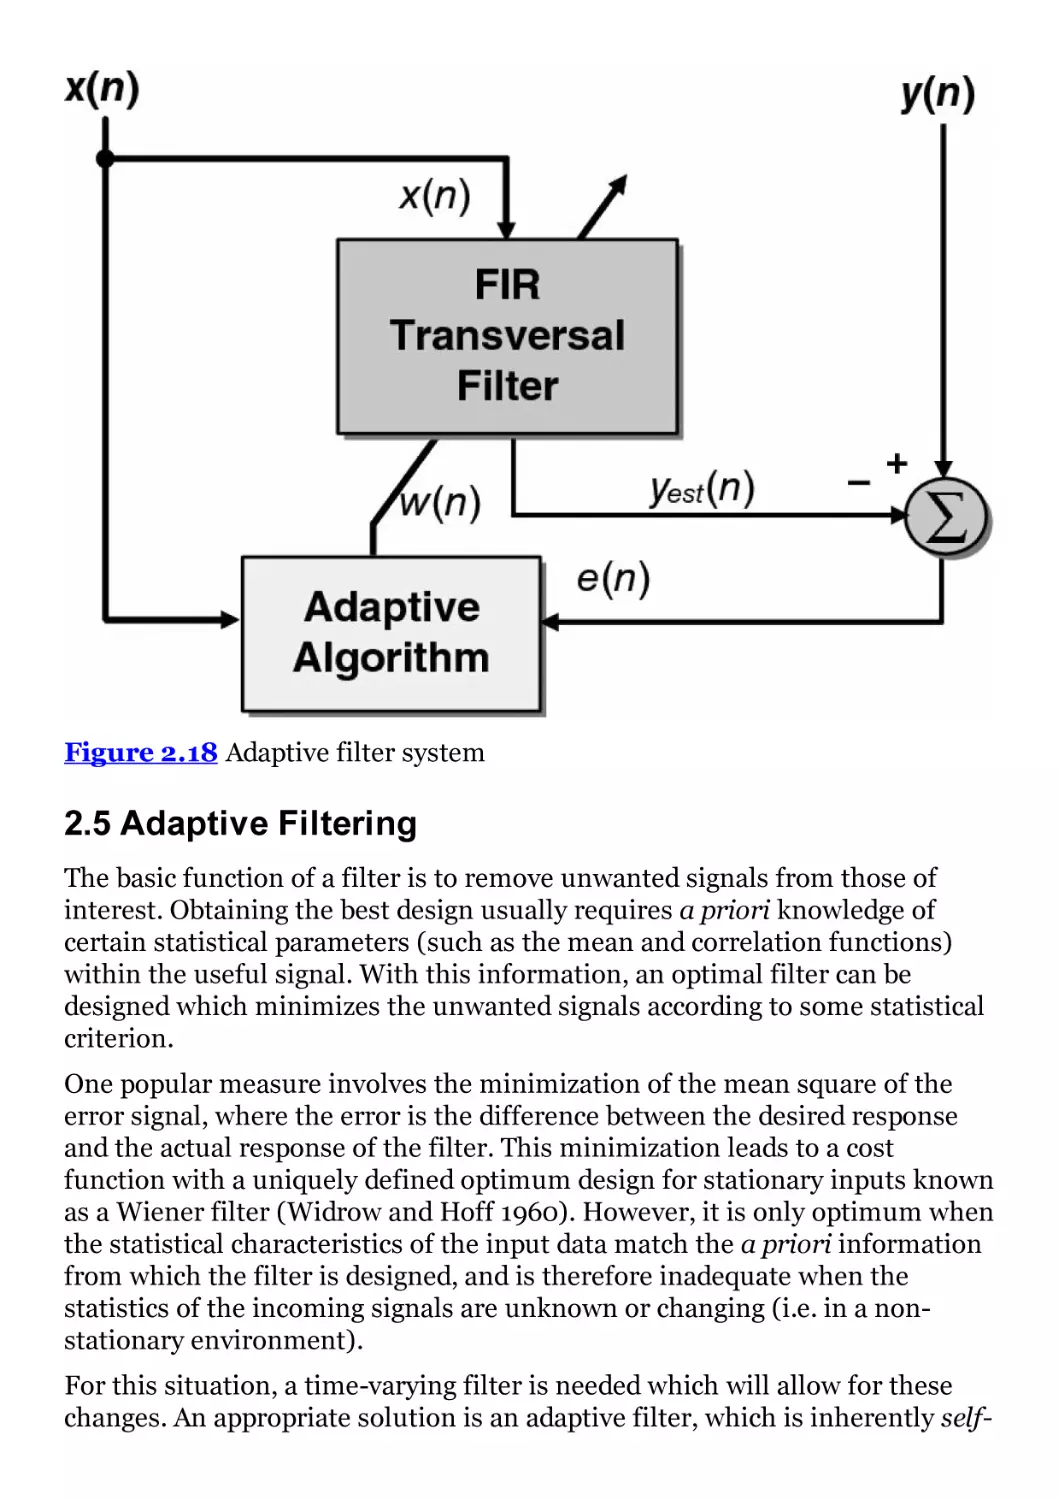 2.5 Adaptive Filtering